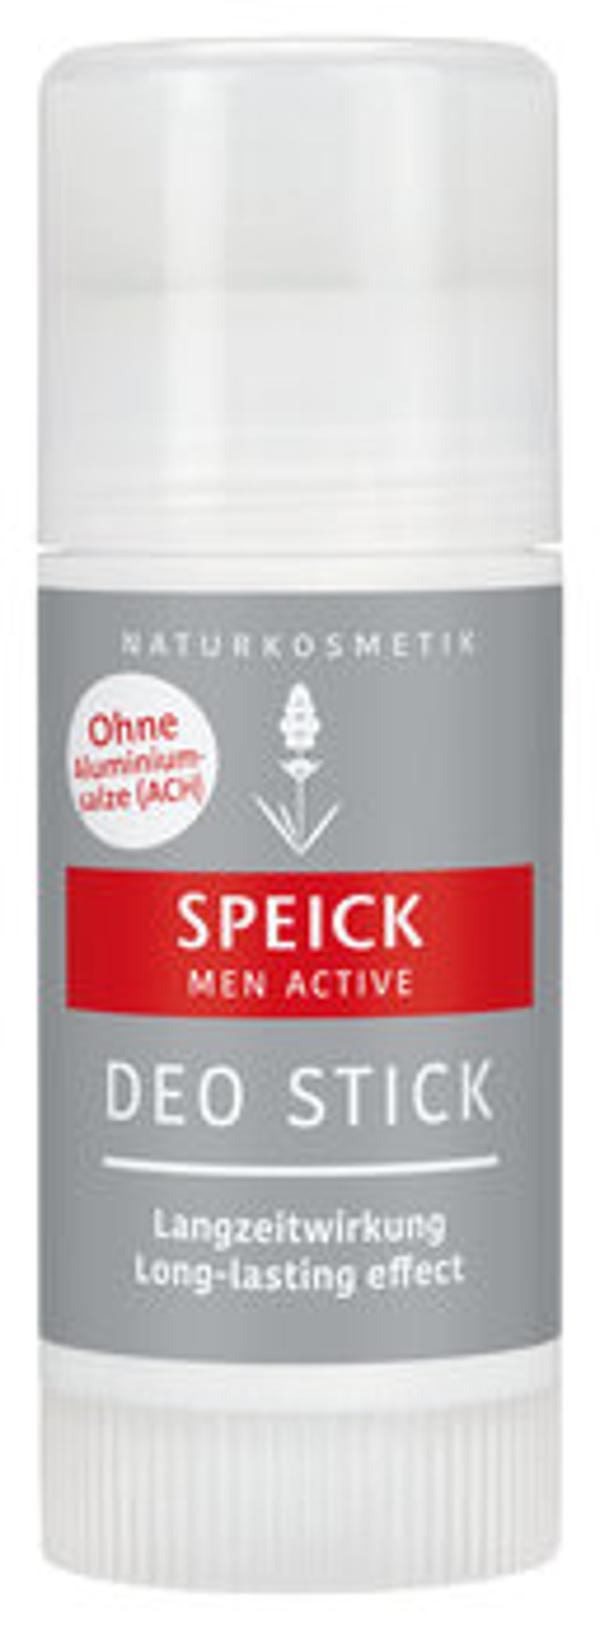 Produktfoto zu Men Active Deo Stick